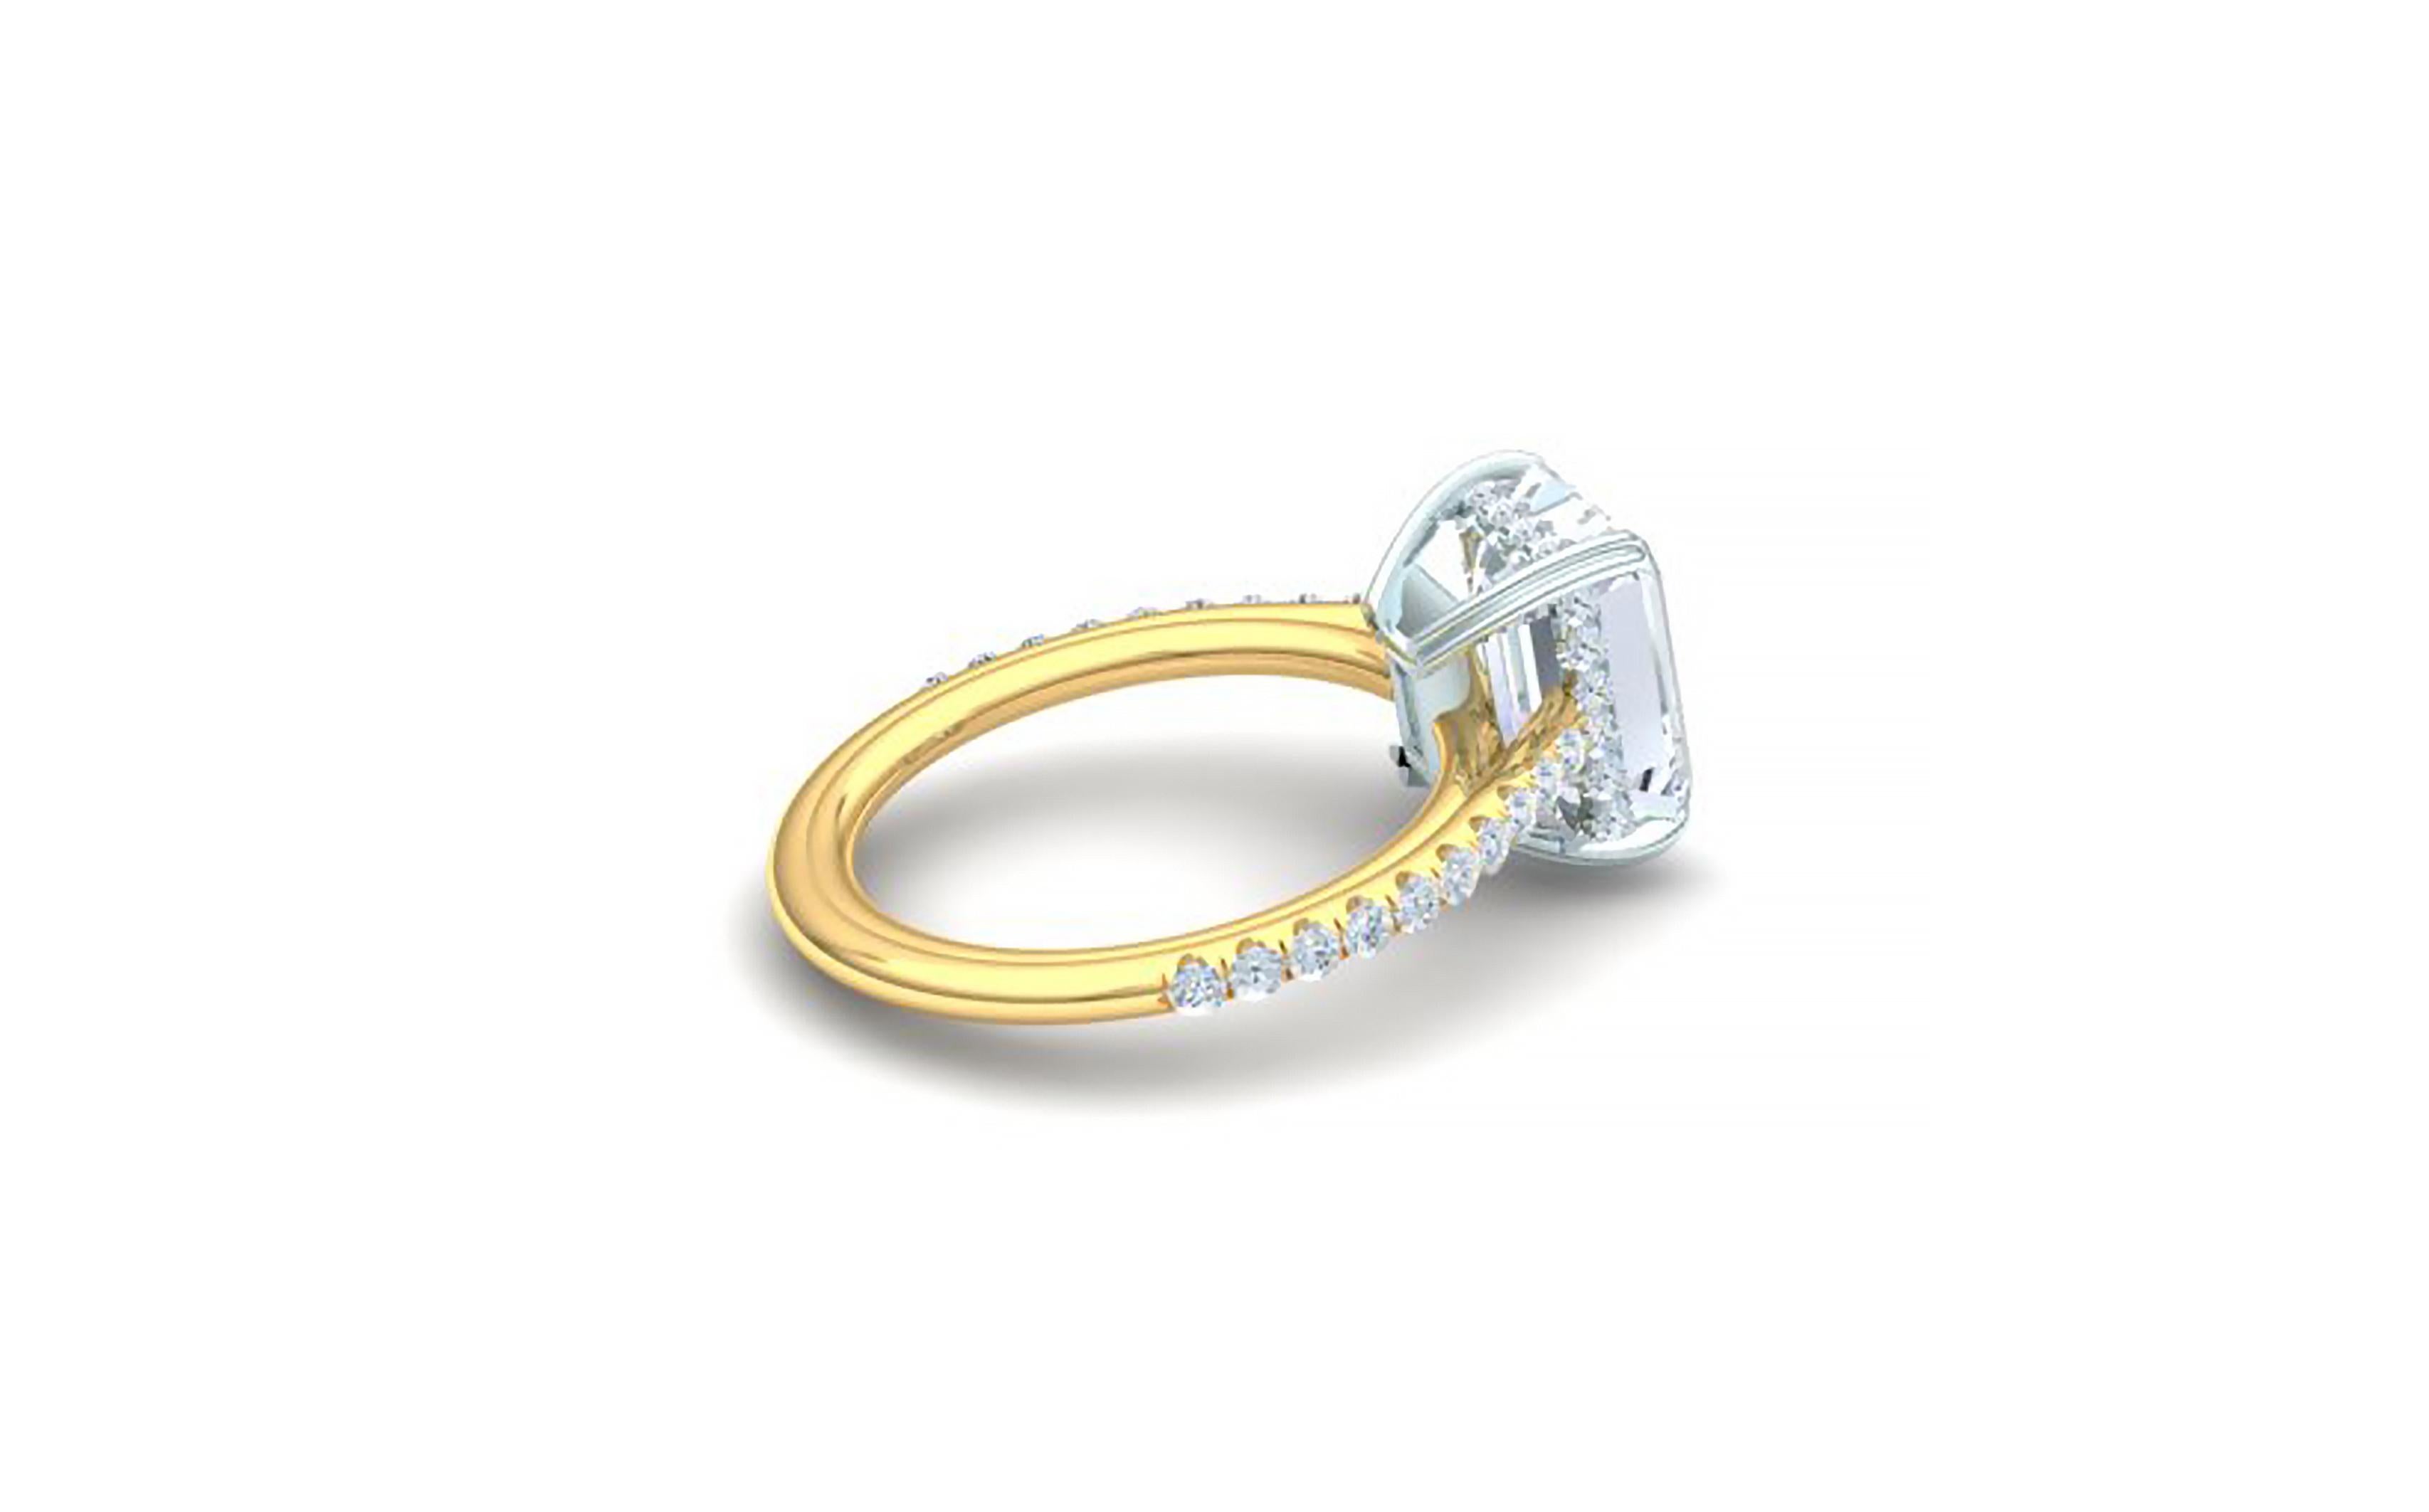 3 carat emerald cut natural diamond ring